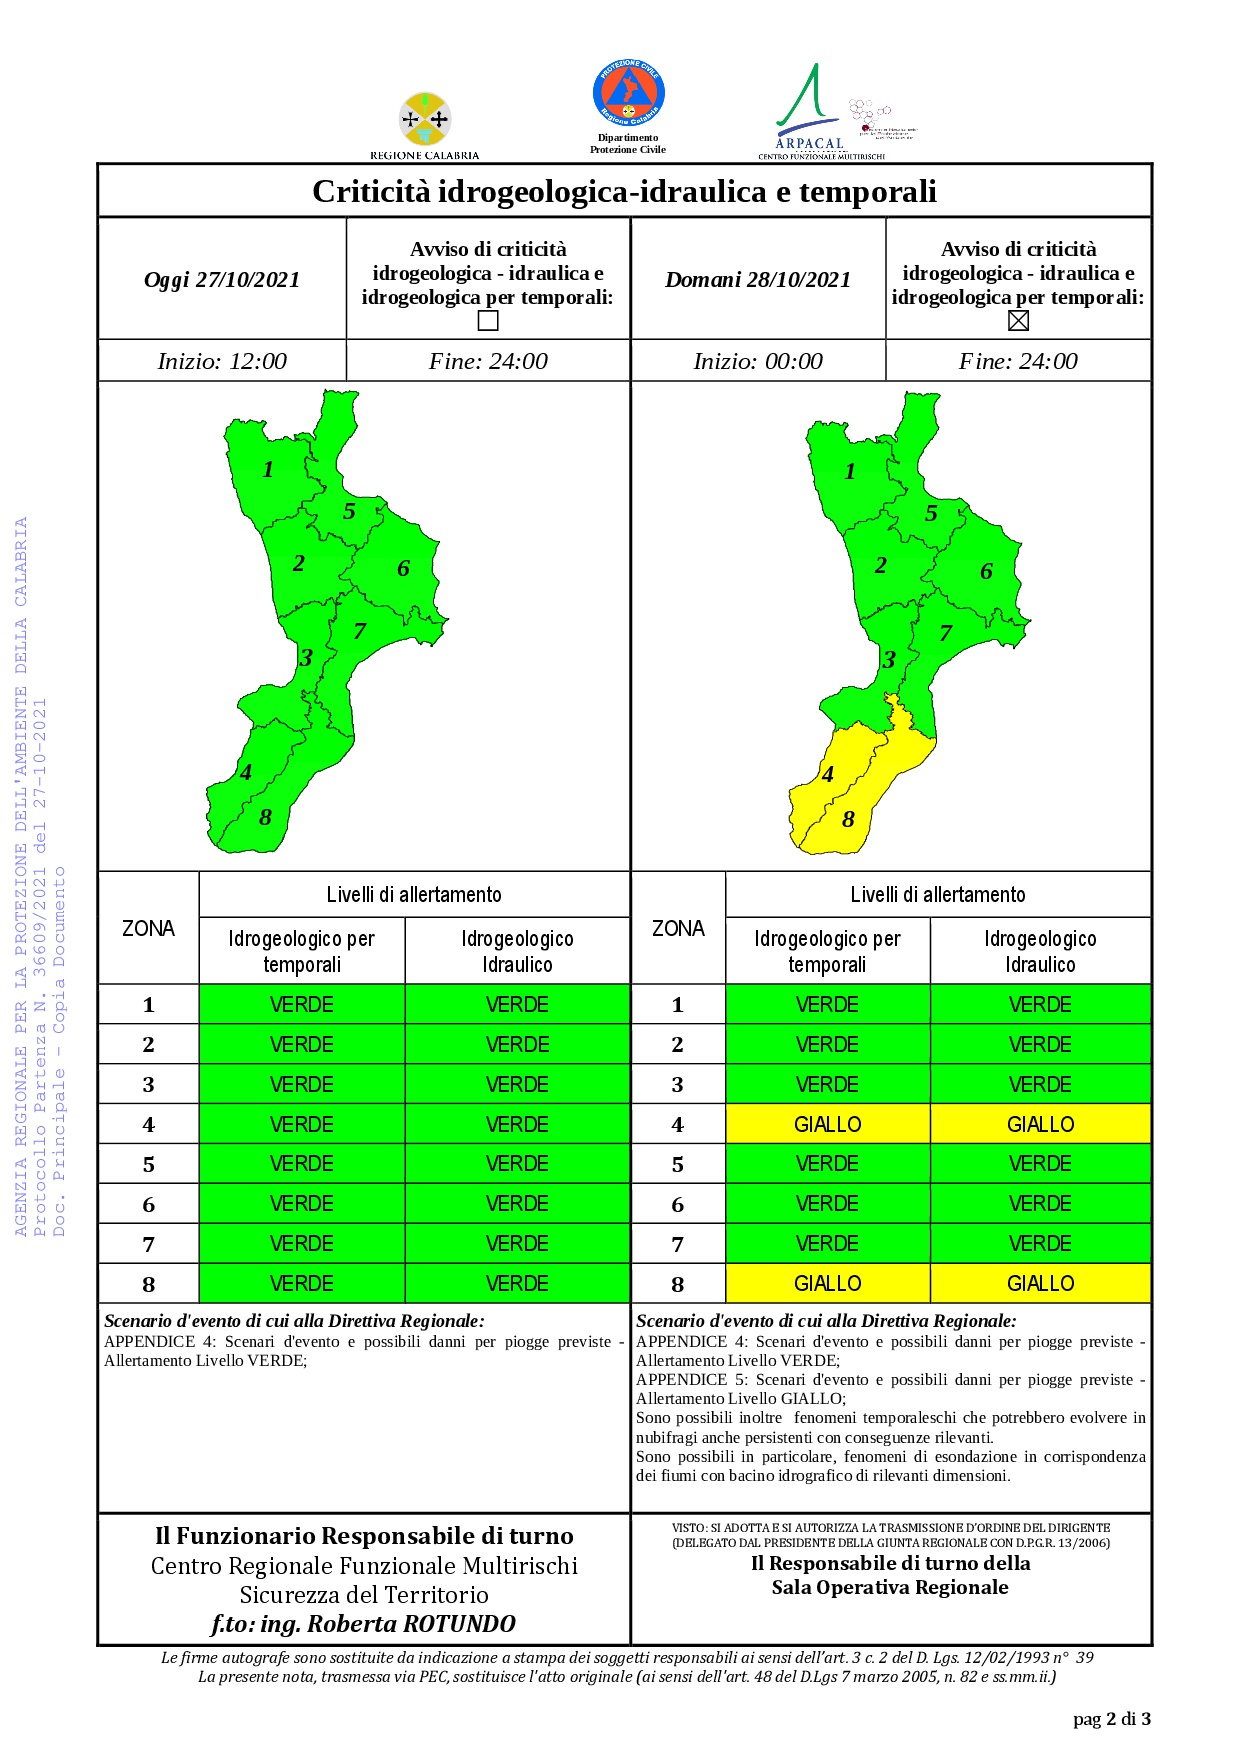 Criticità idrogeologica-idraulica e temporali in Calabria 27-10-2021